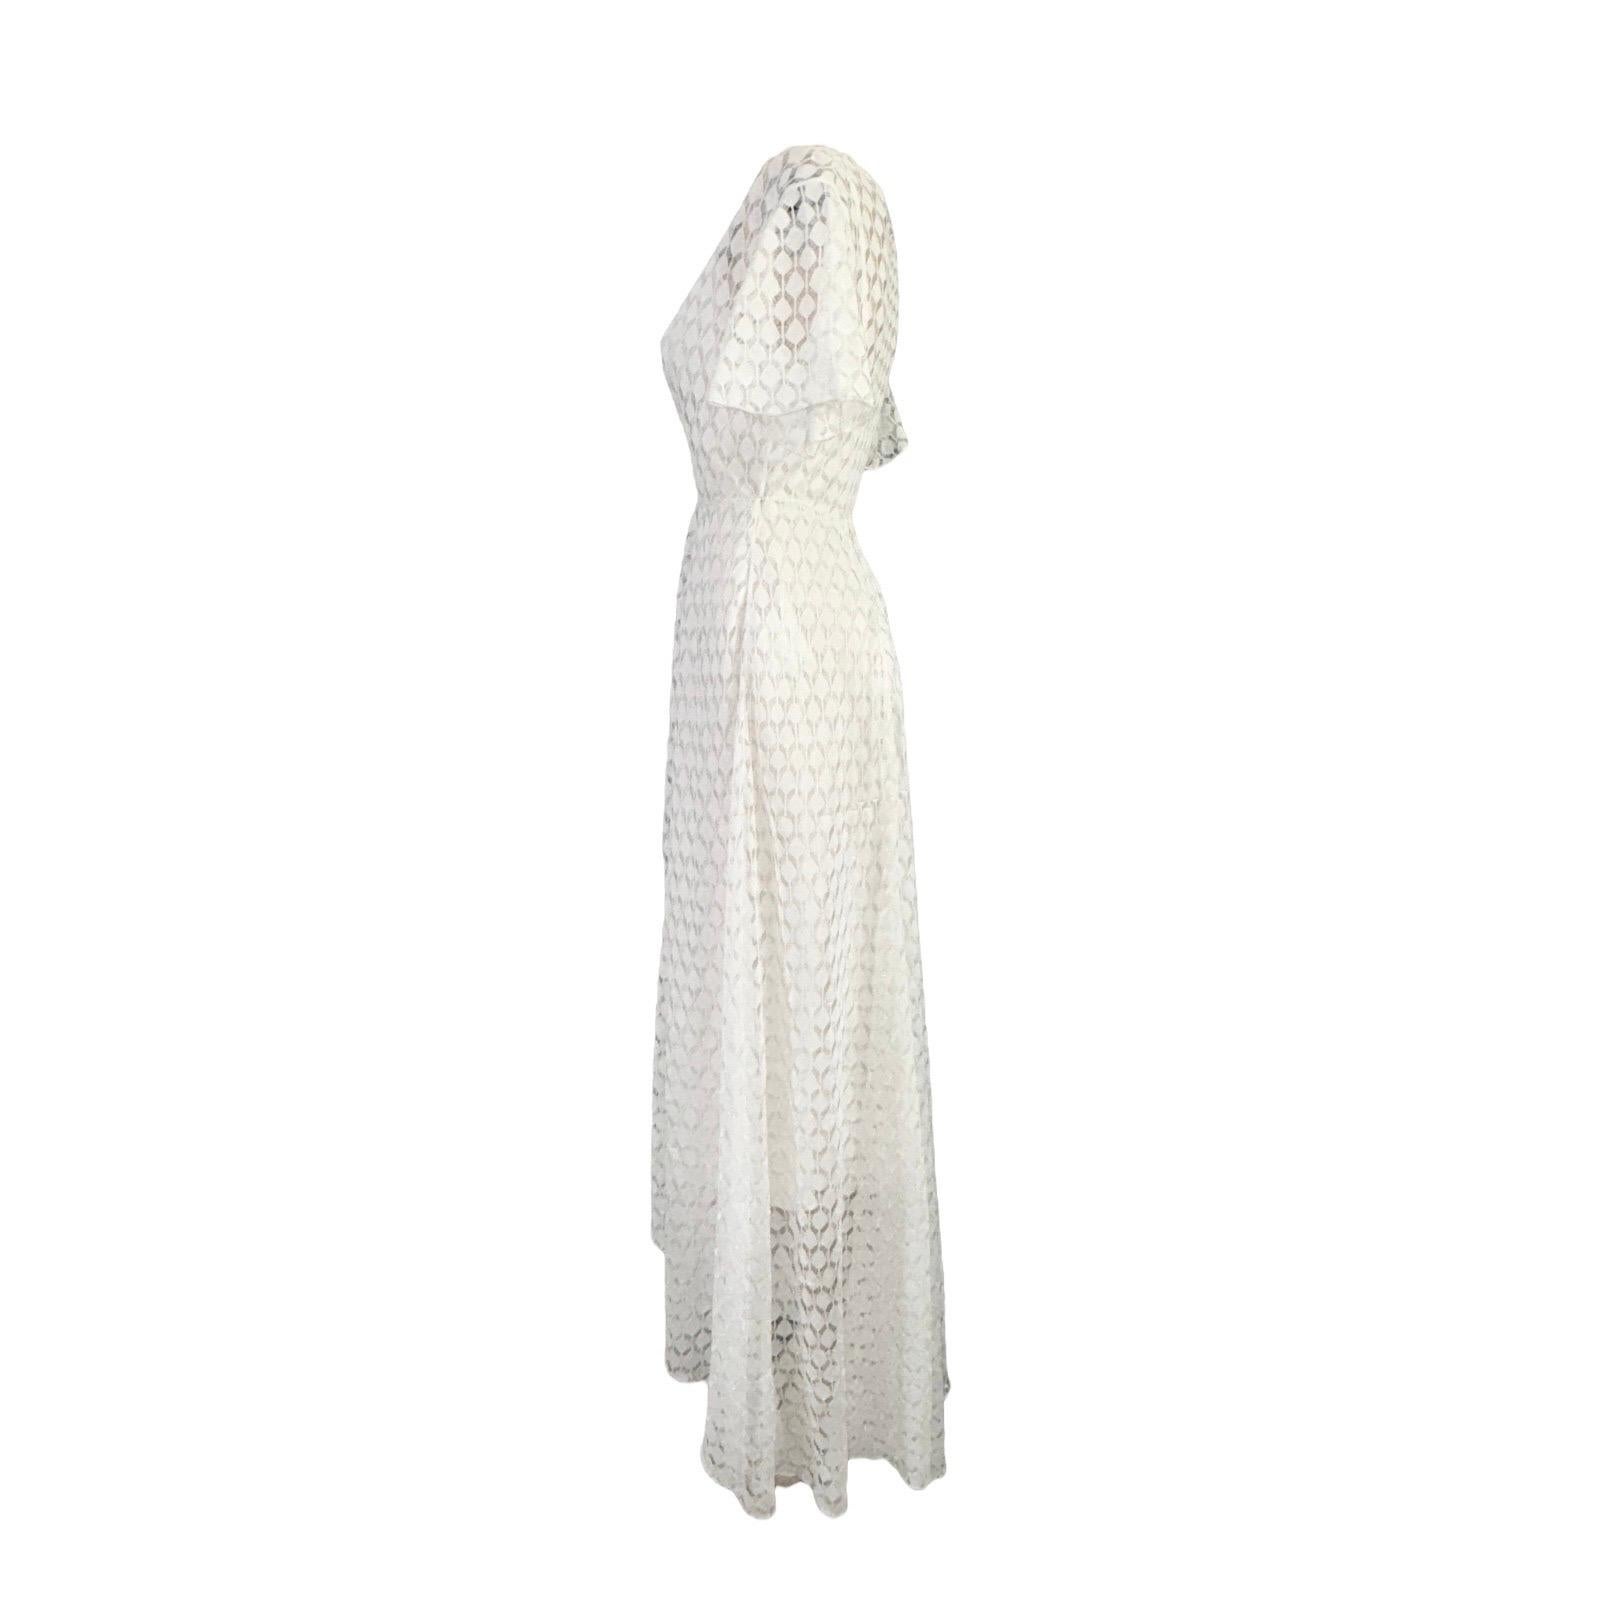 Stunning MISSONI dress
Consisting of 2 pieces - crochet knit dress and silk slip dress
